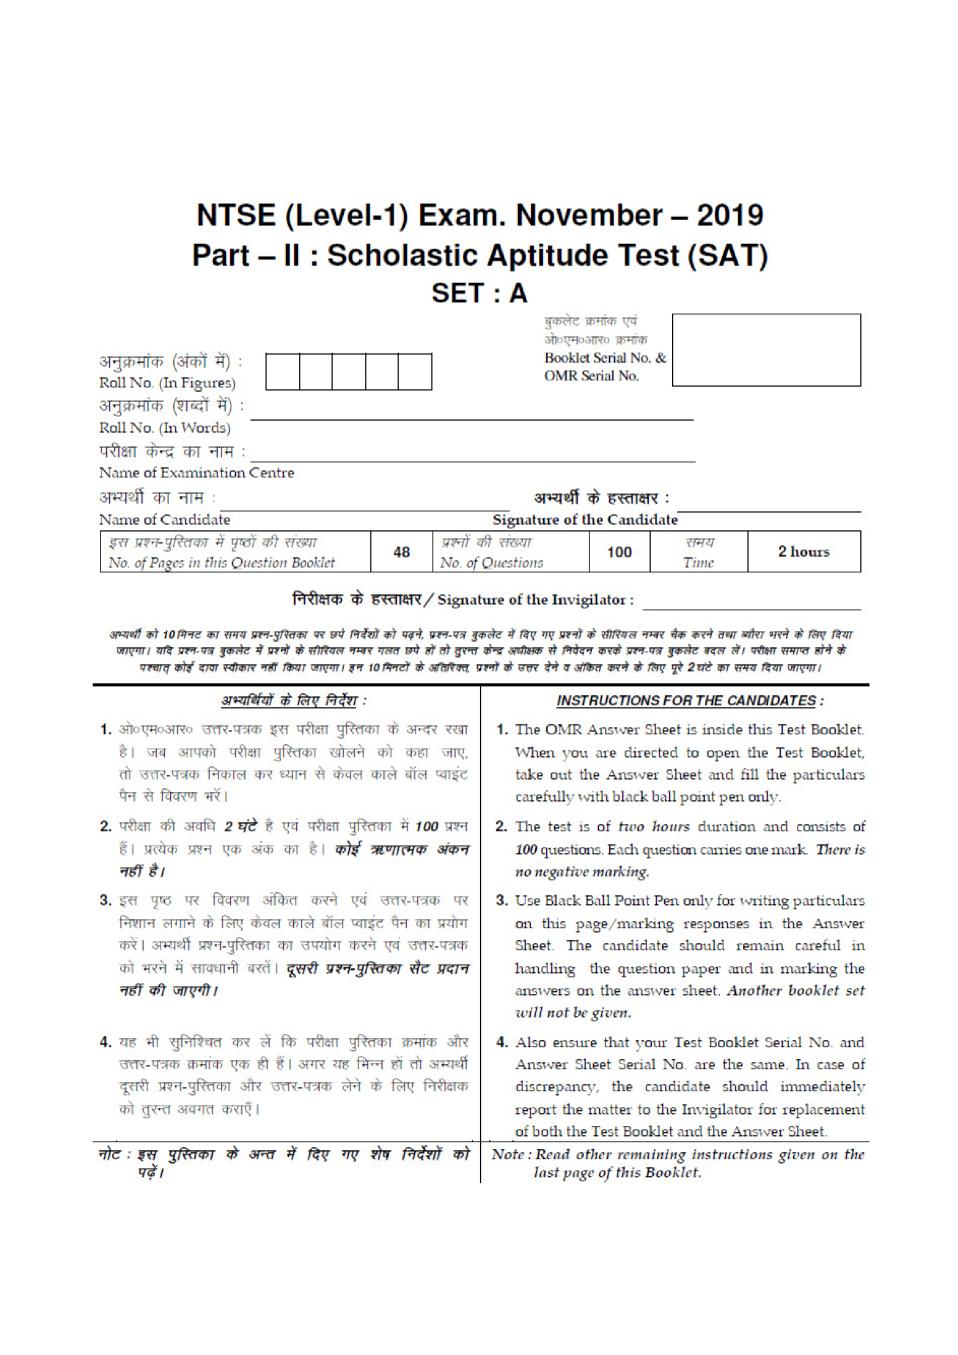 Haryana NTSE Nov 2019 SAT Question Paper Set A - Page 1